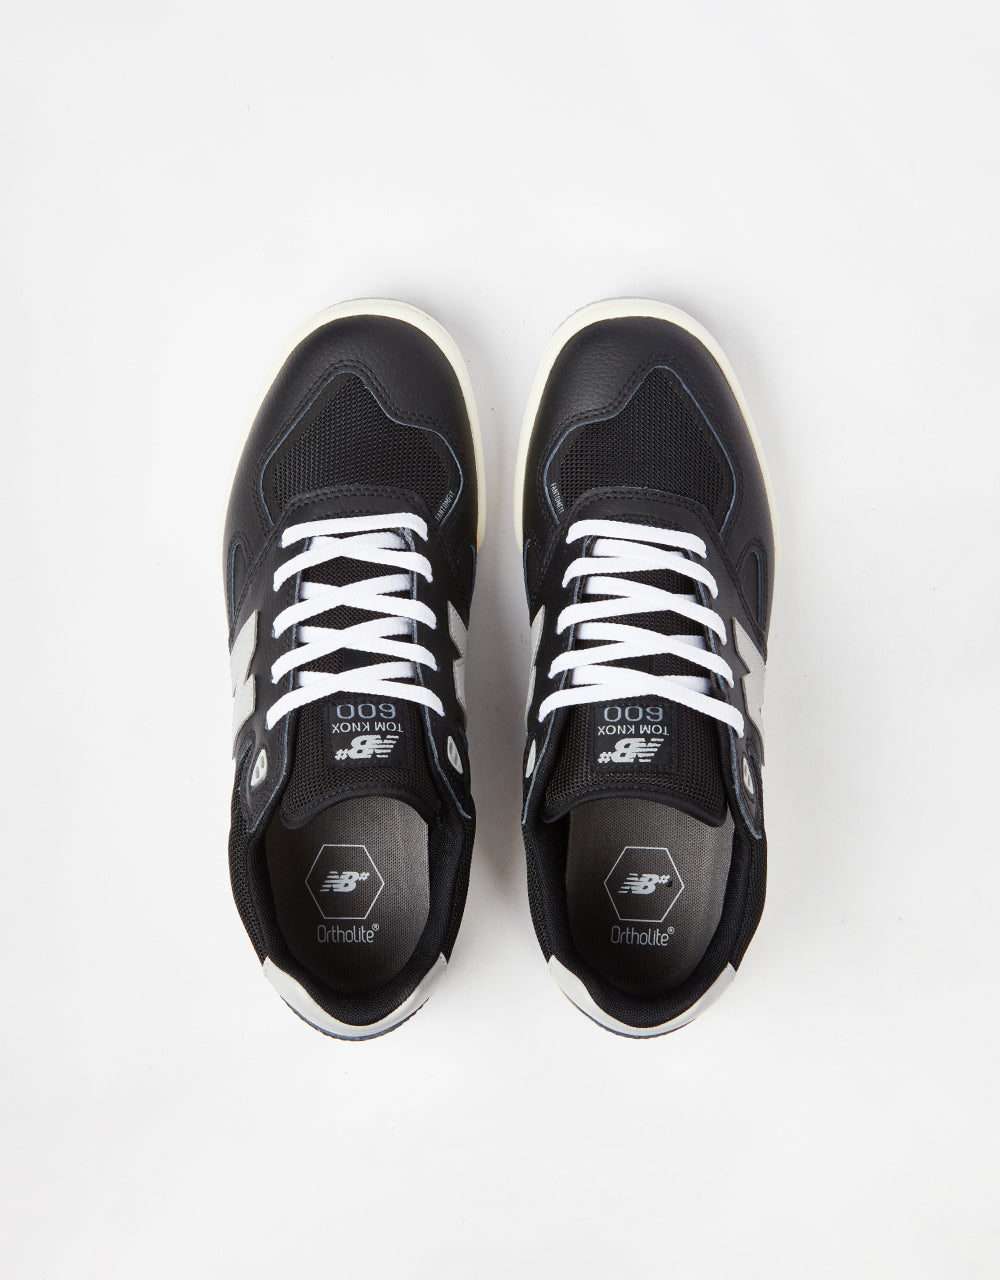 New Balance Numeric Tom Knox 600 Skate Shoes - Black/Grey